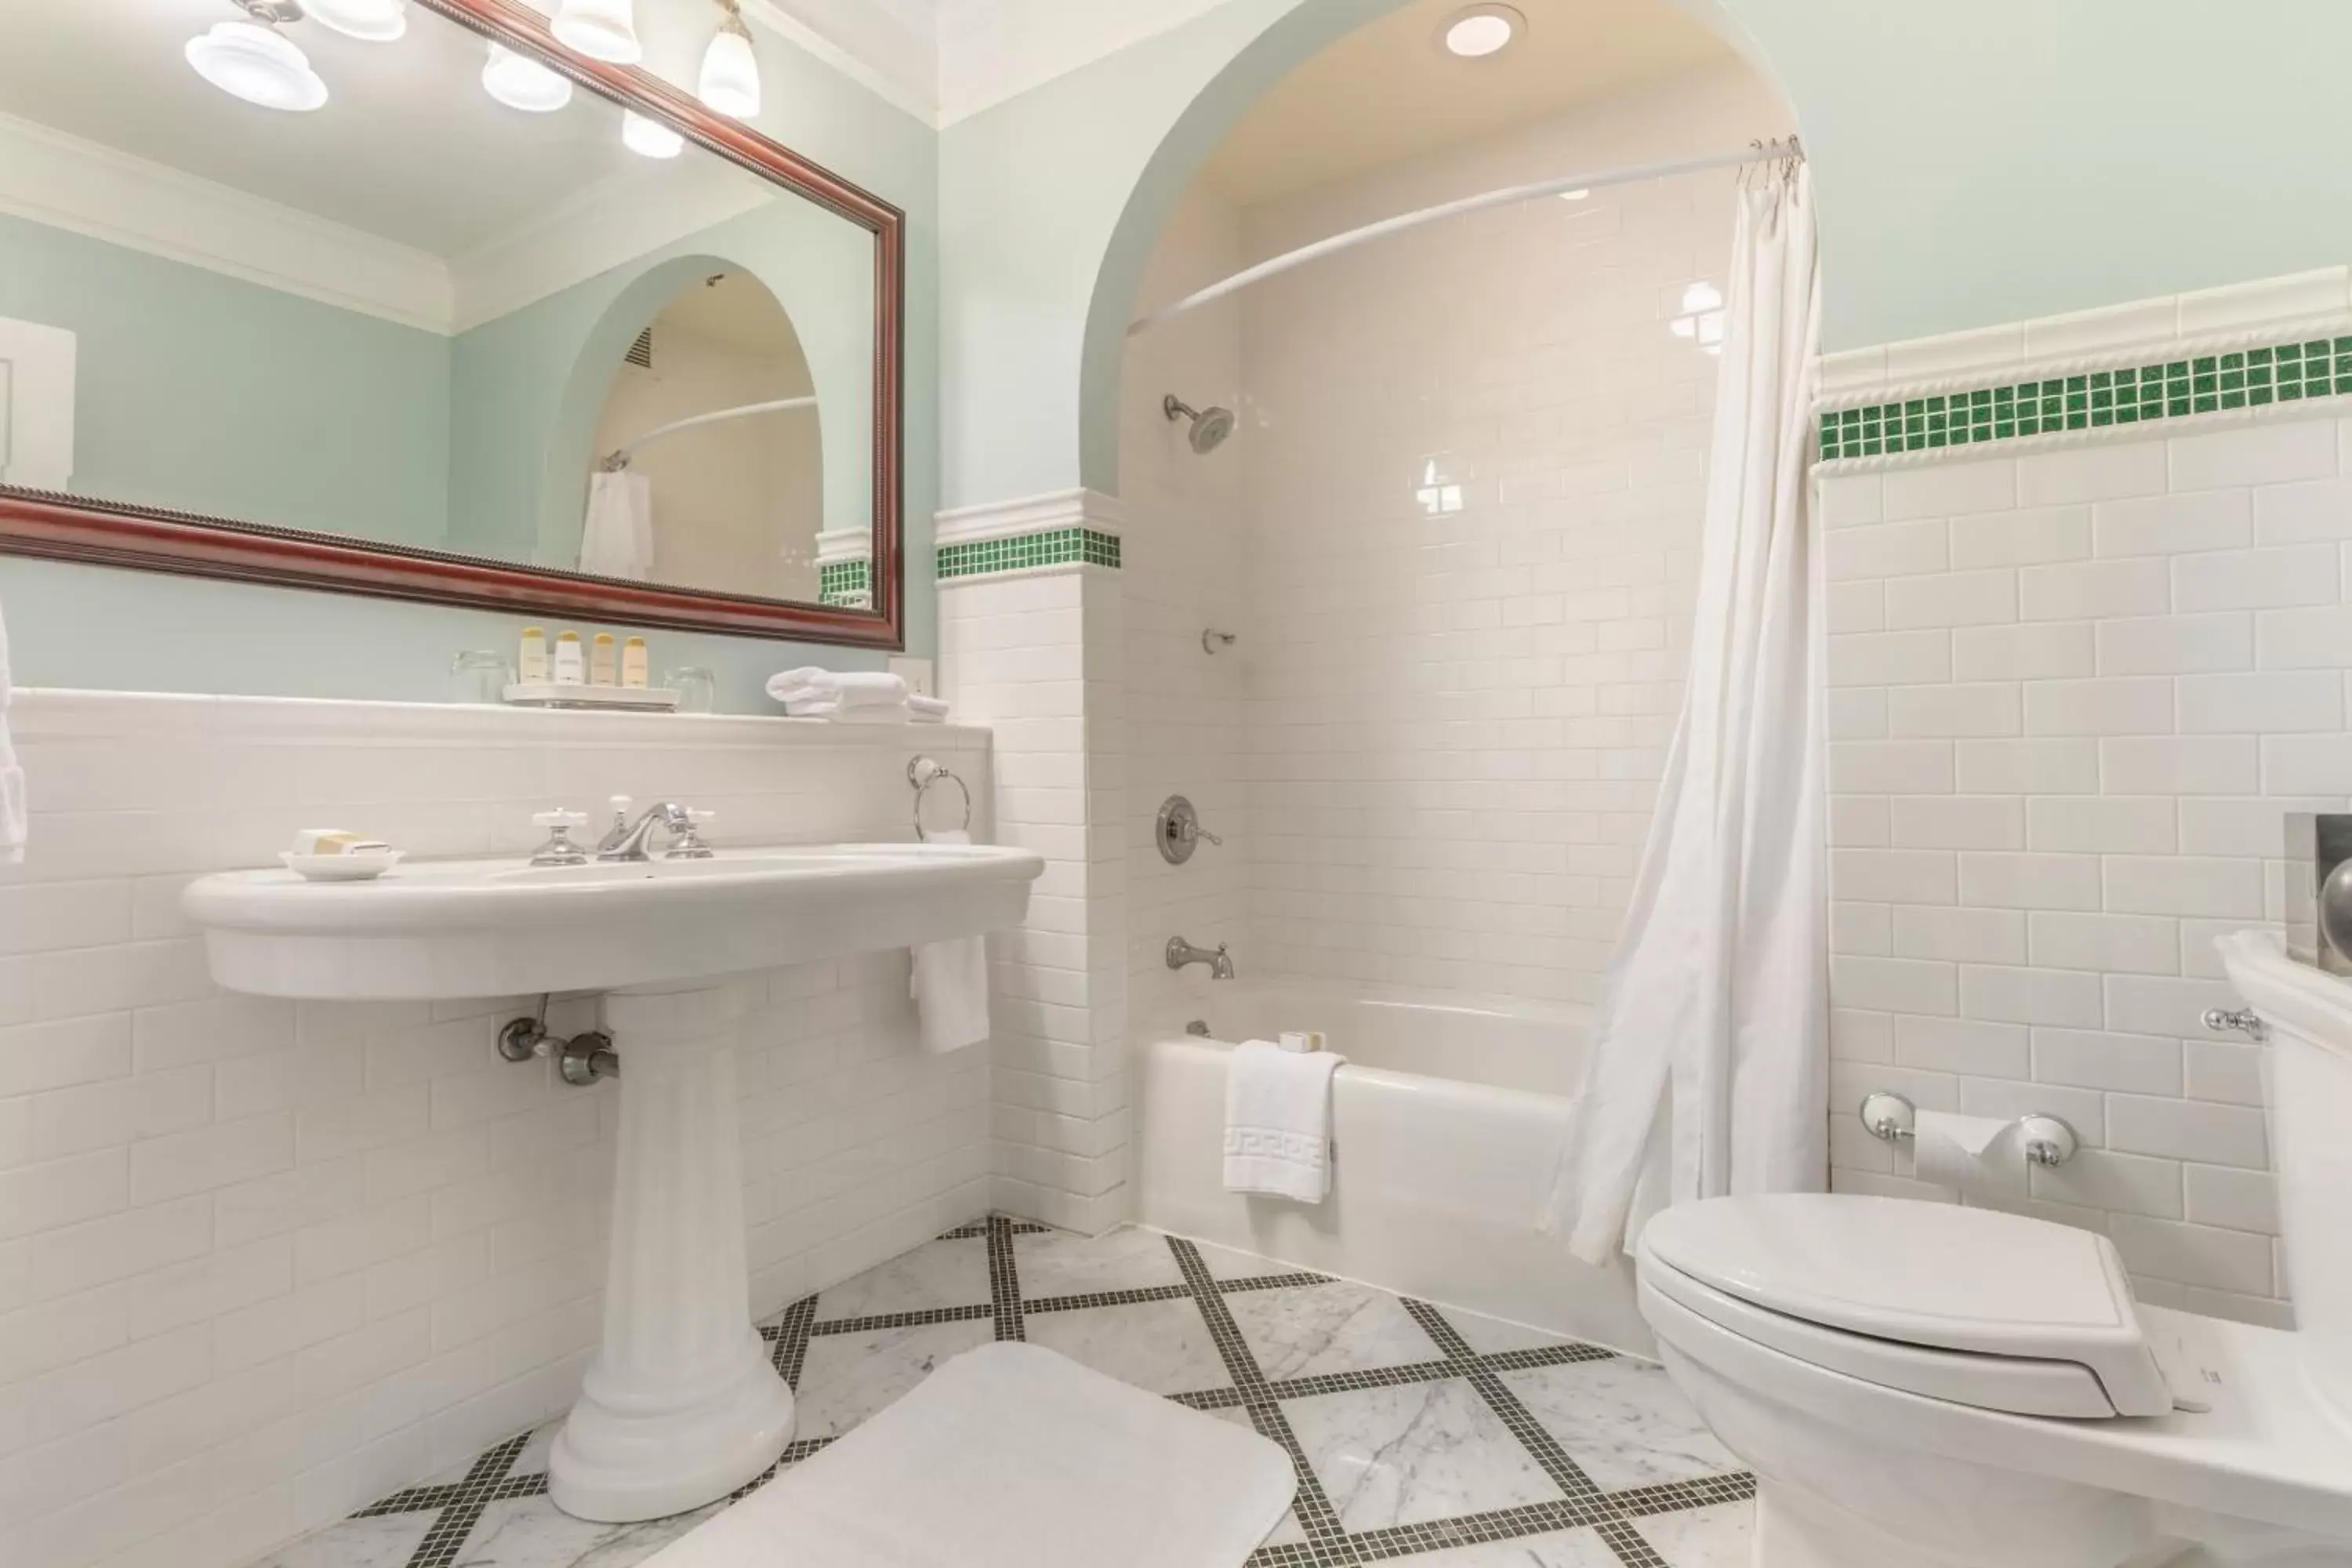 Bathroom in The Omni Homestead Resort